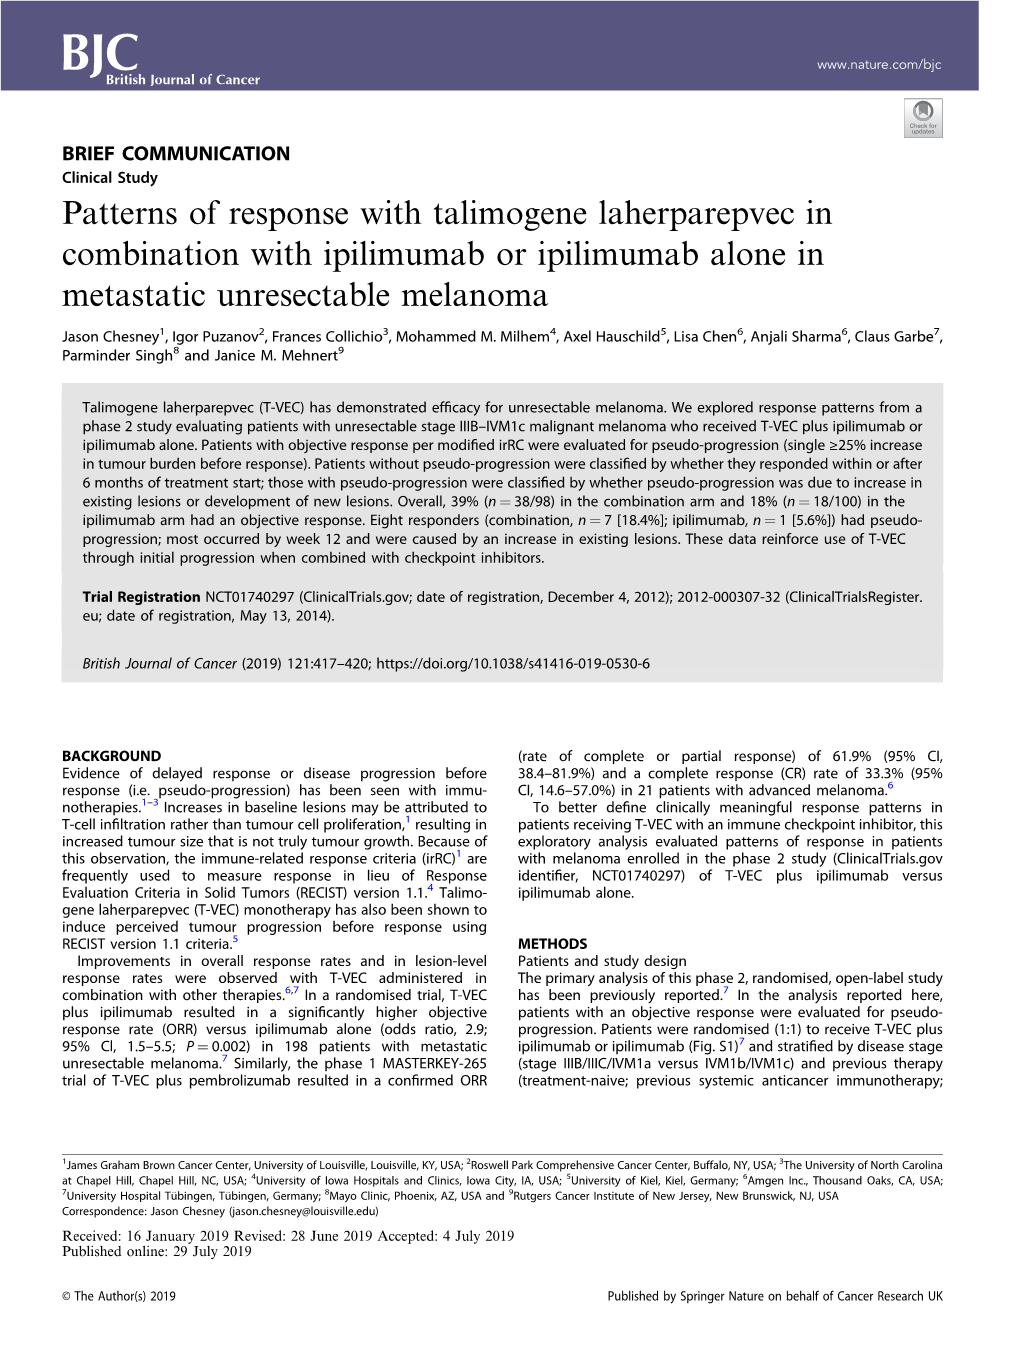 Patterns of Response with Talimogene Laherparepvec in Combination with Ipilimumab Or Ipilimumab Alone in Metastatic Unresectable Melanoma